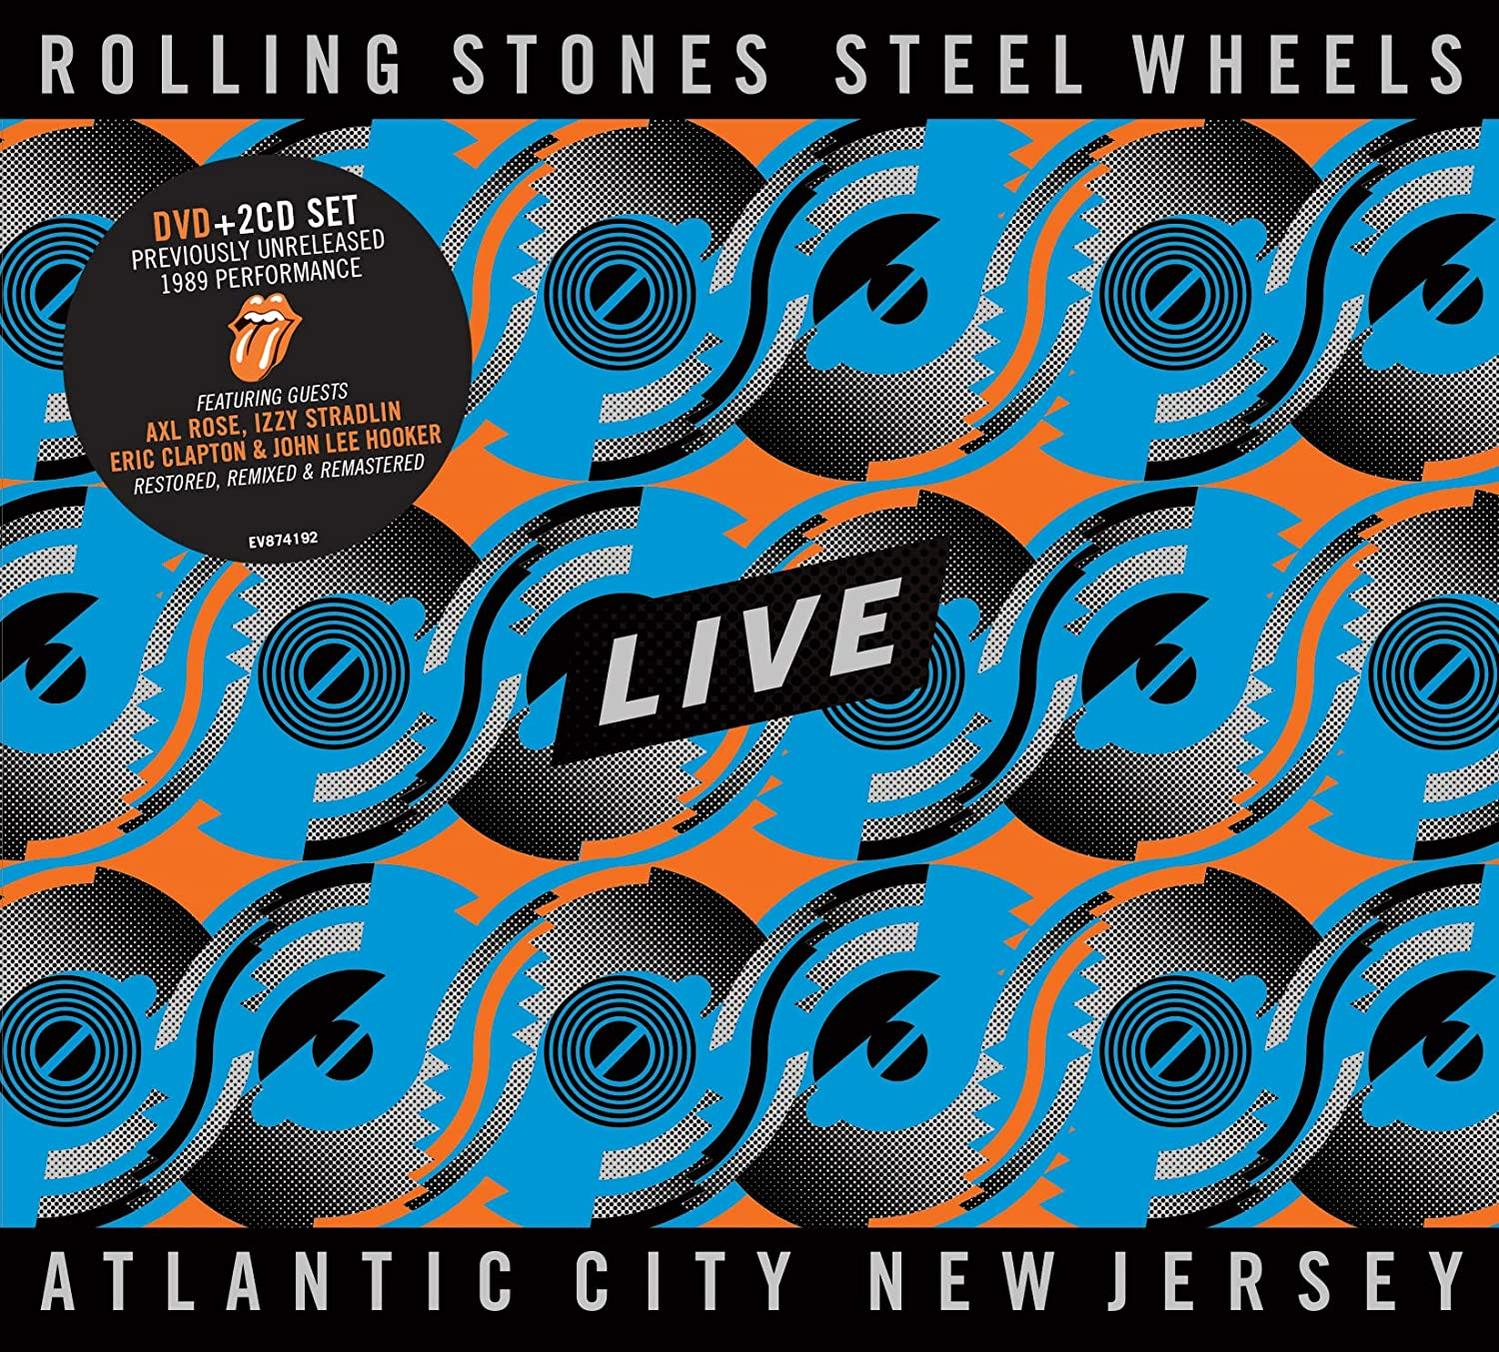 (DVD - The City The Rolling Rolling 1989) Live (Atlantic Stones Stones - - Wheels CD) + Steel